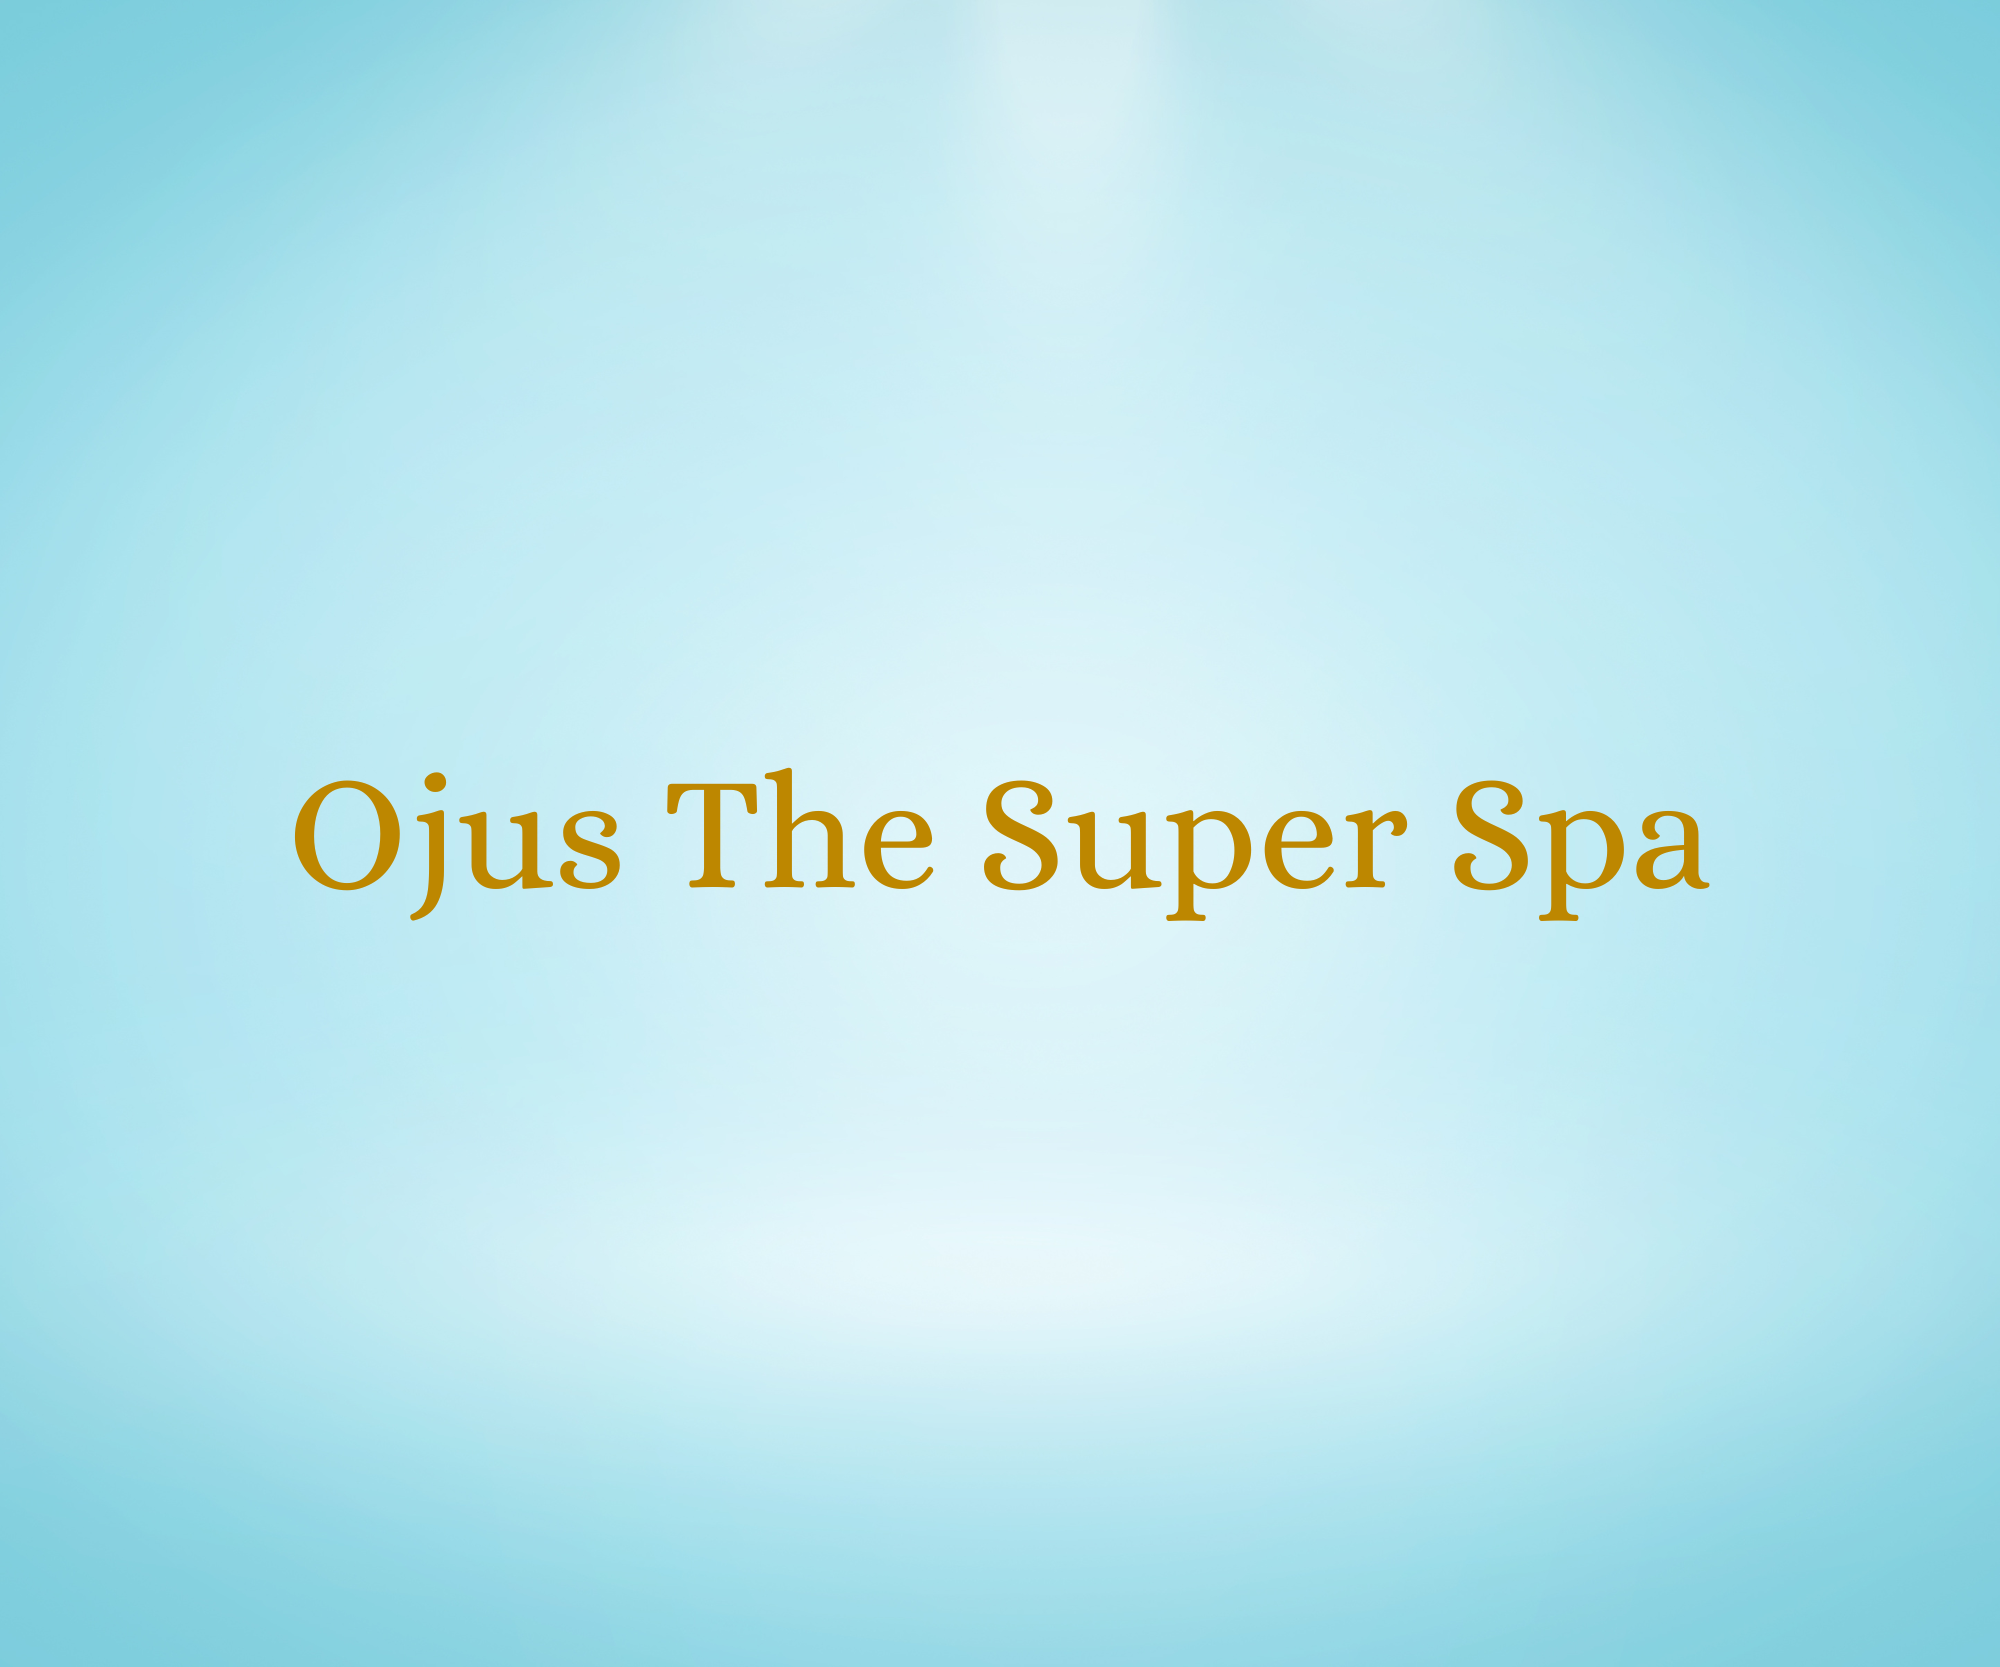 Ojus The Super Spa 